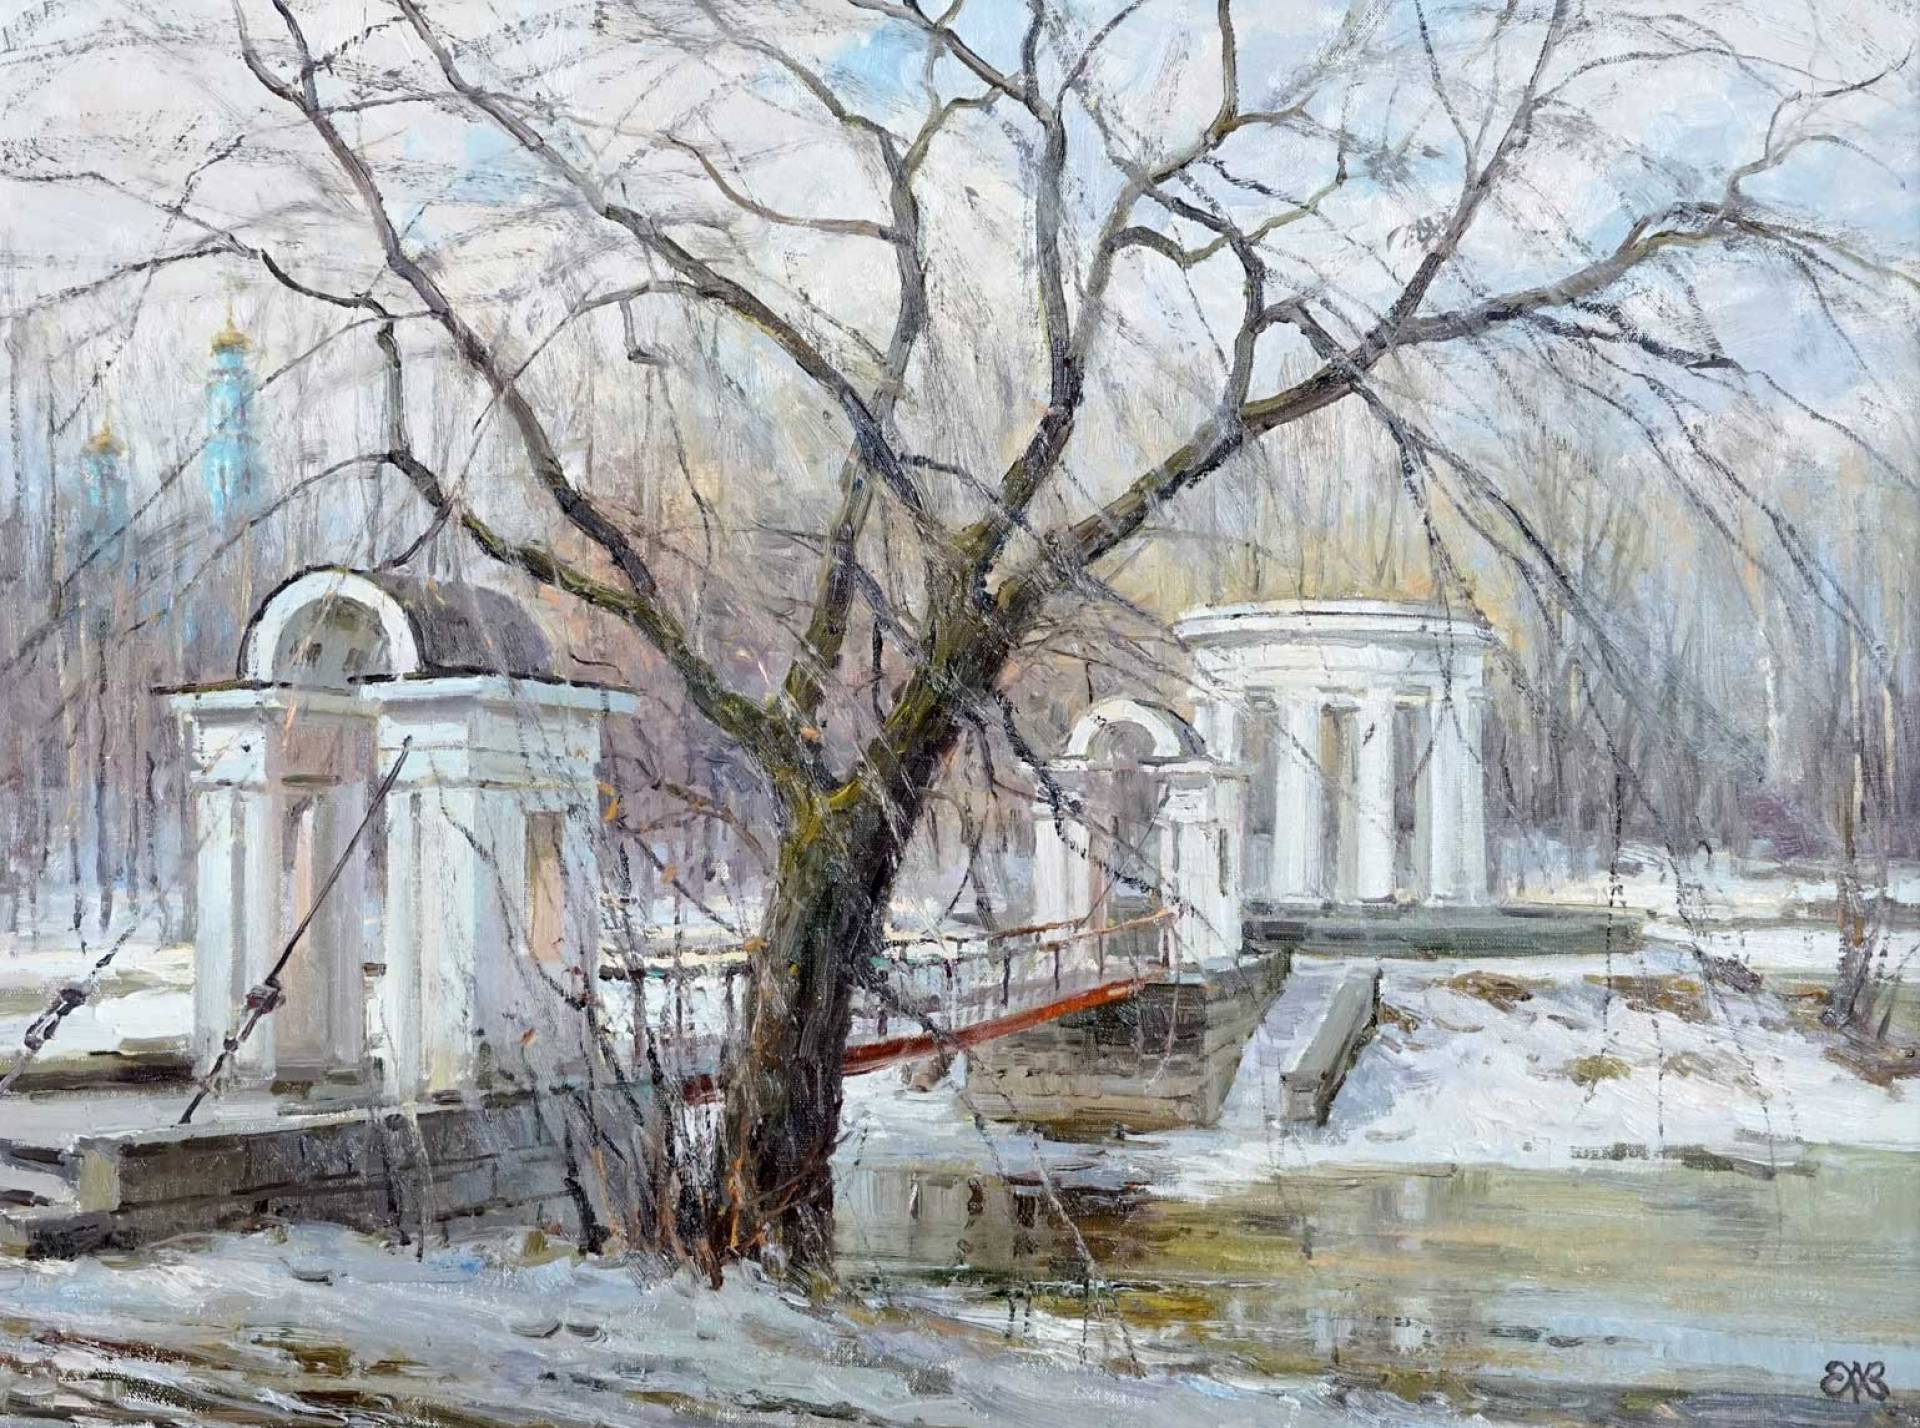 In Kharitonovsky Park - 1, Alexey Efremov, Buy the painting Oil